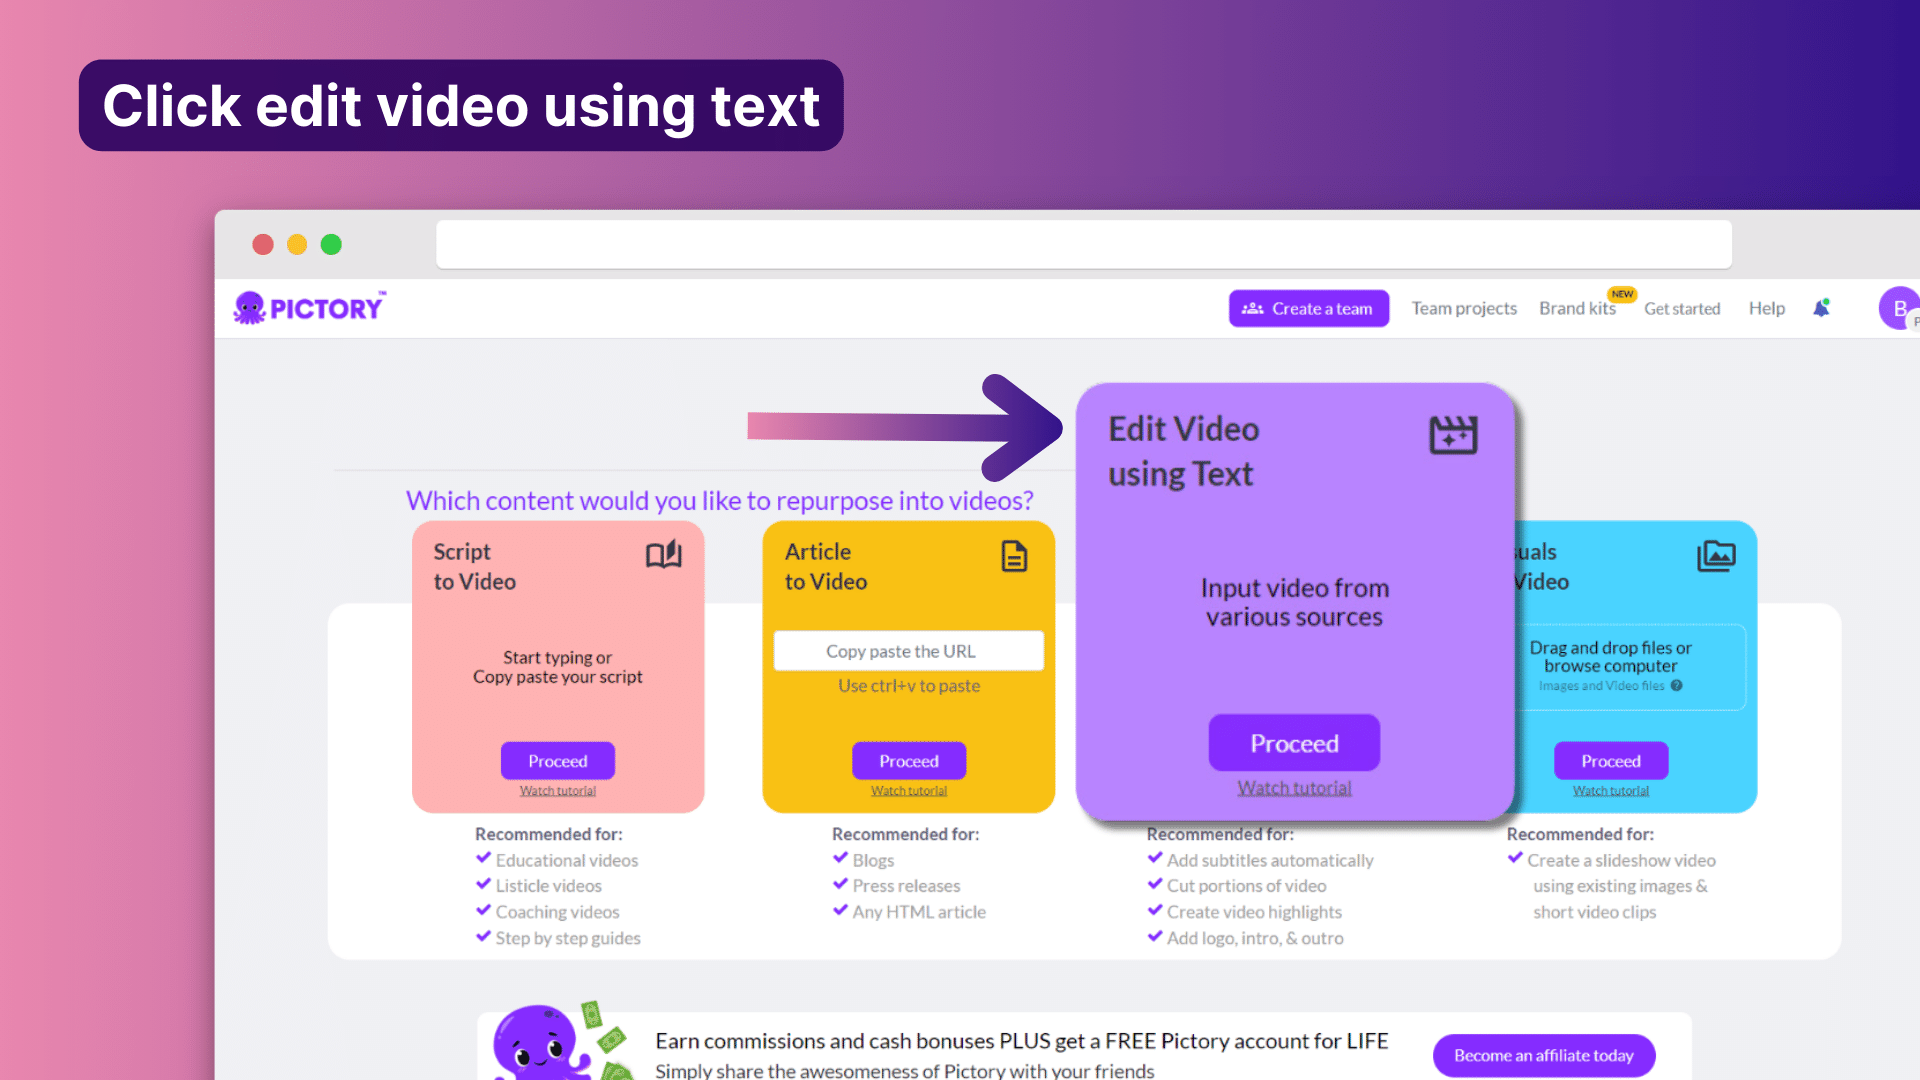 Edit Videos Using Text